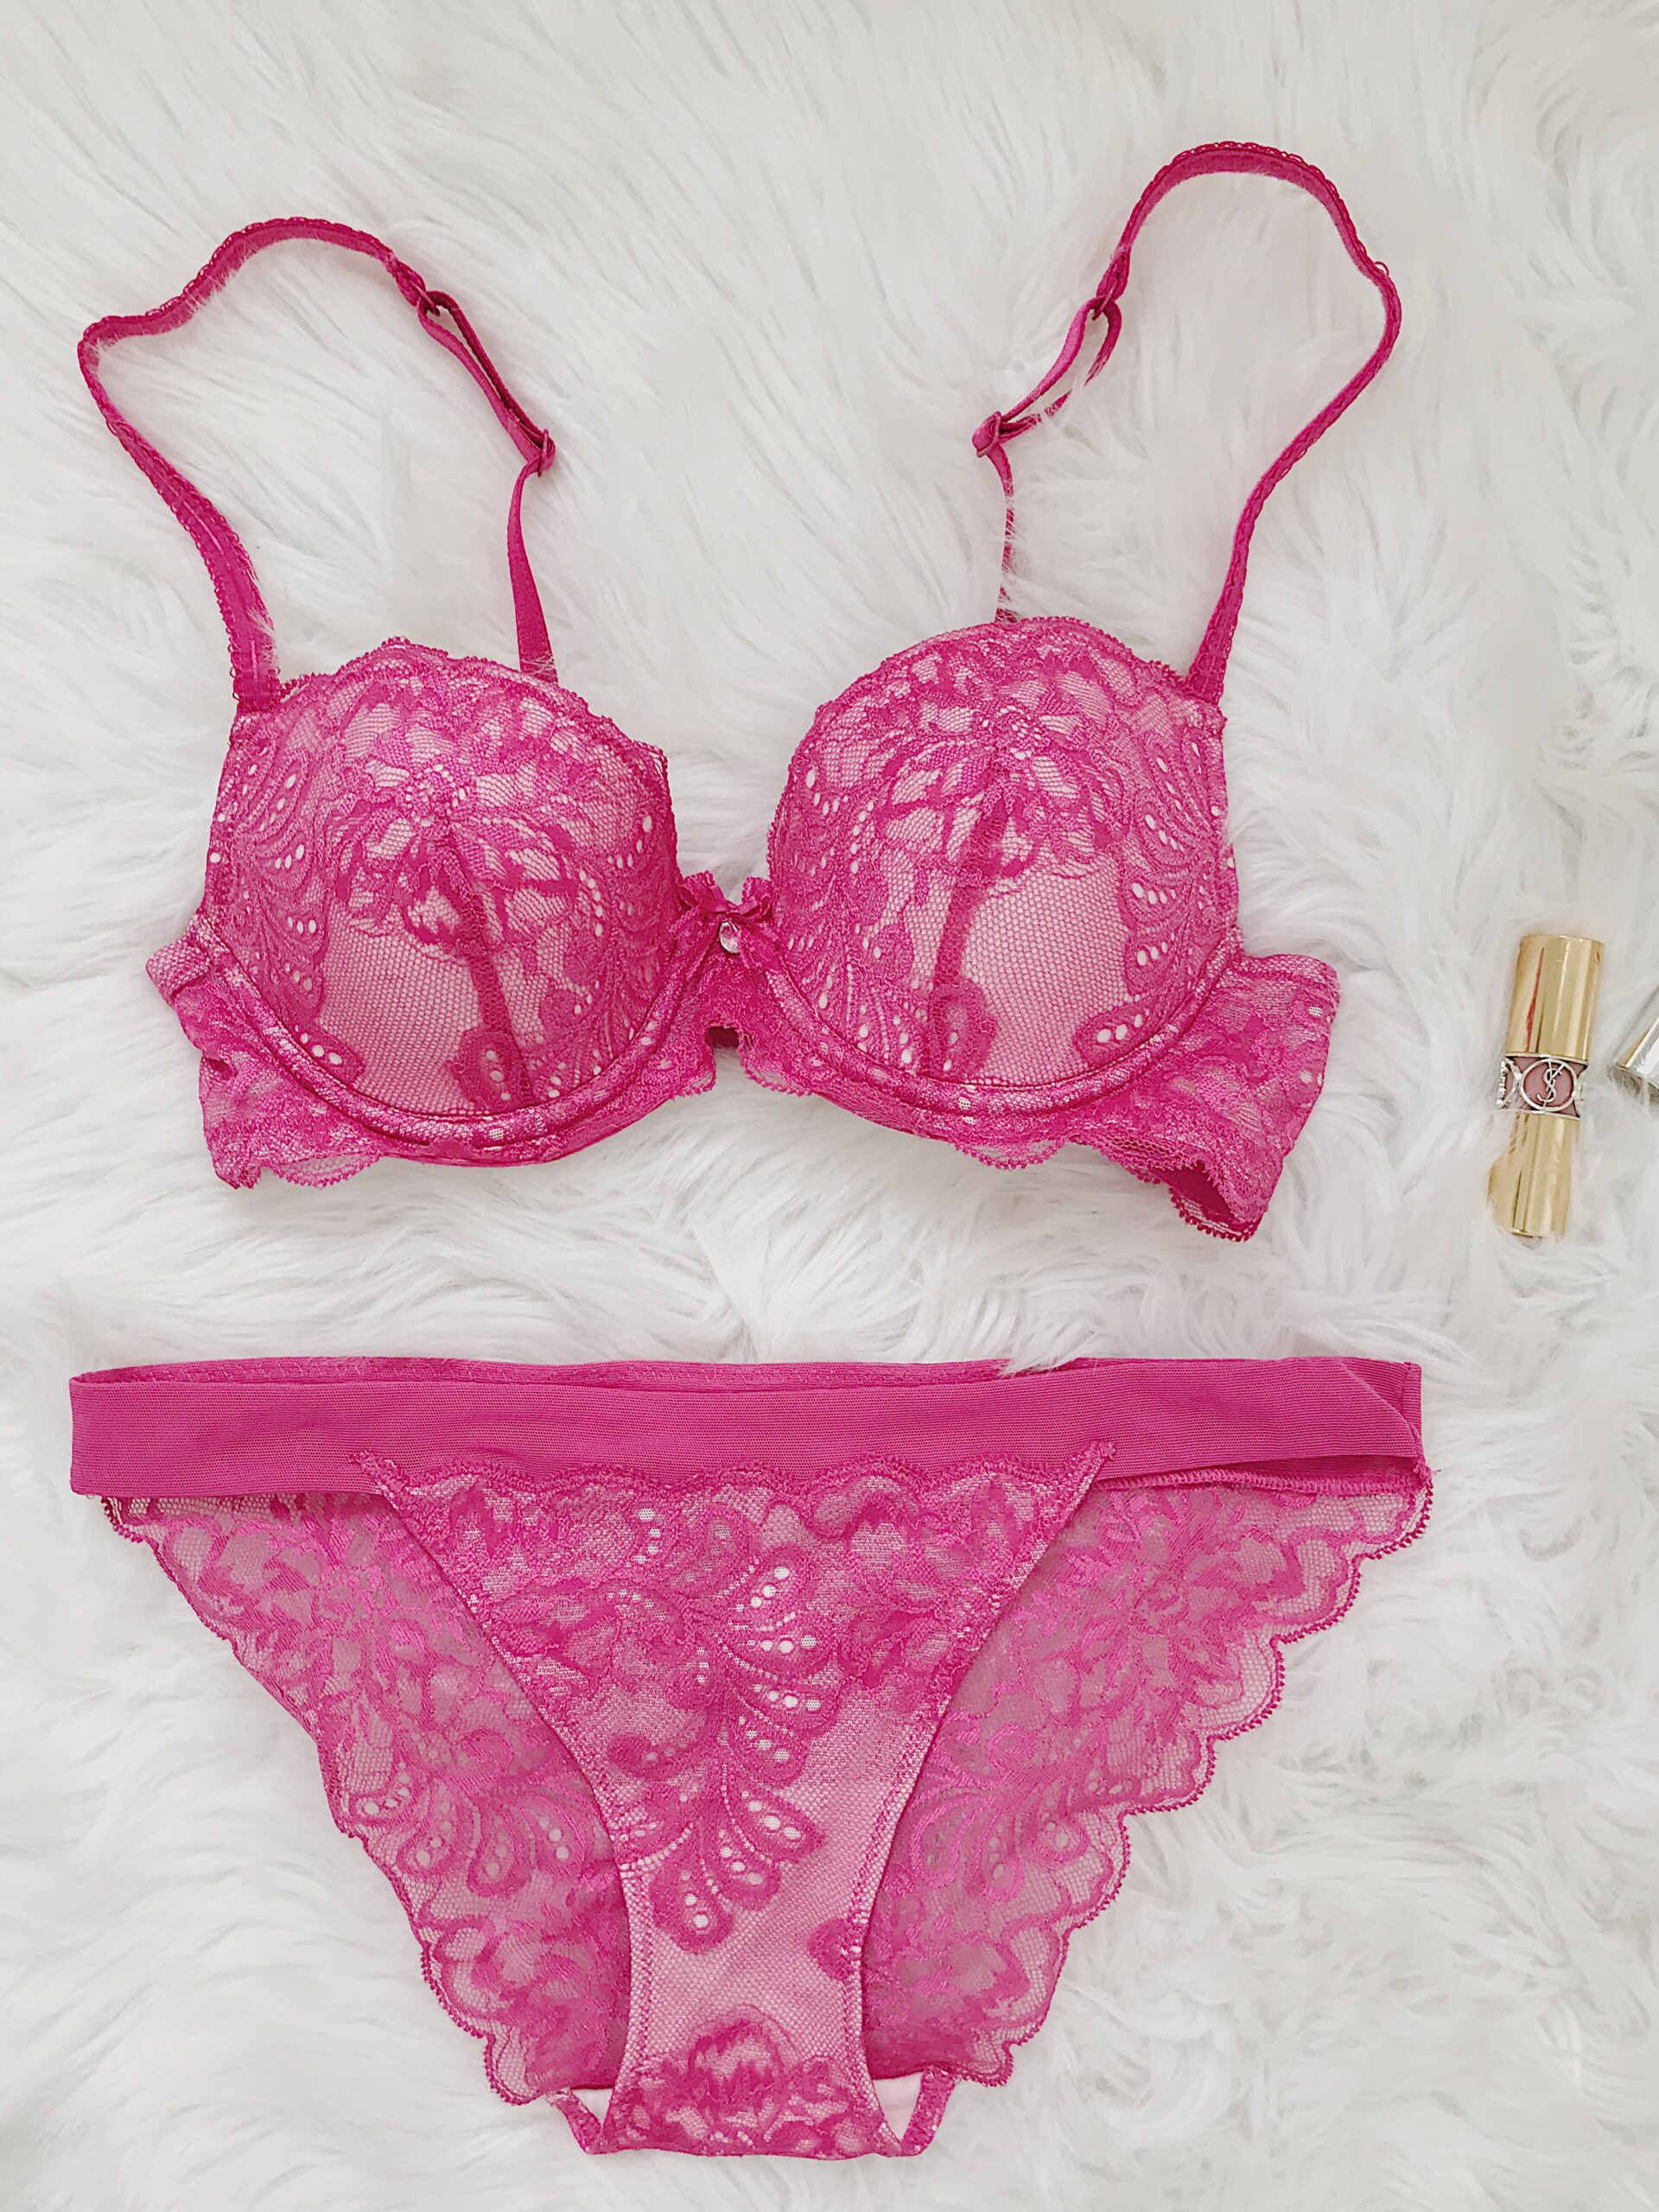 pink lace lingerie